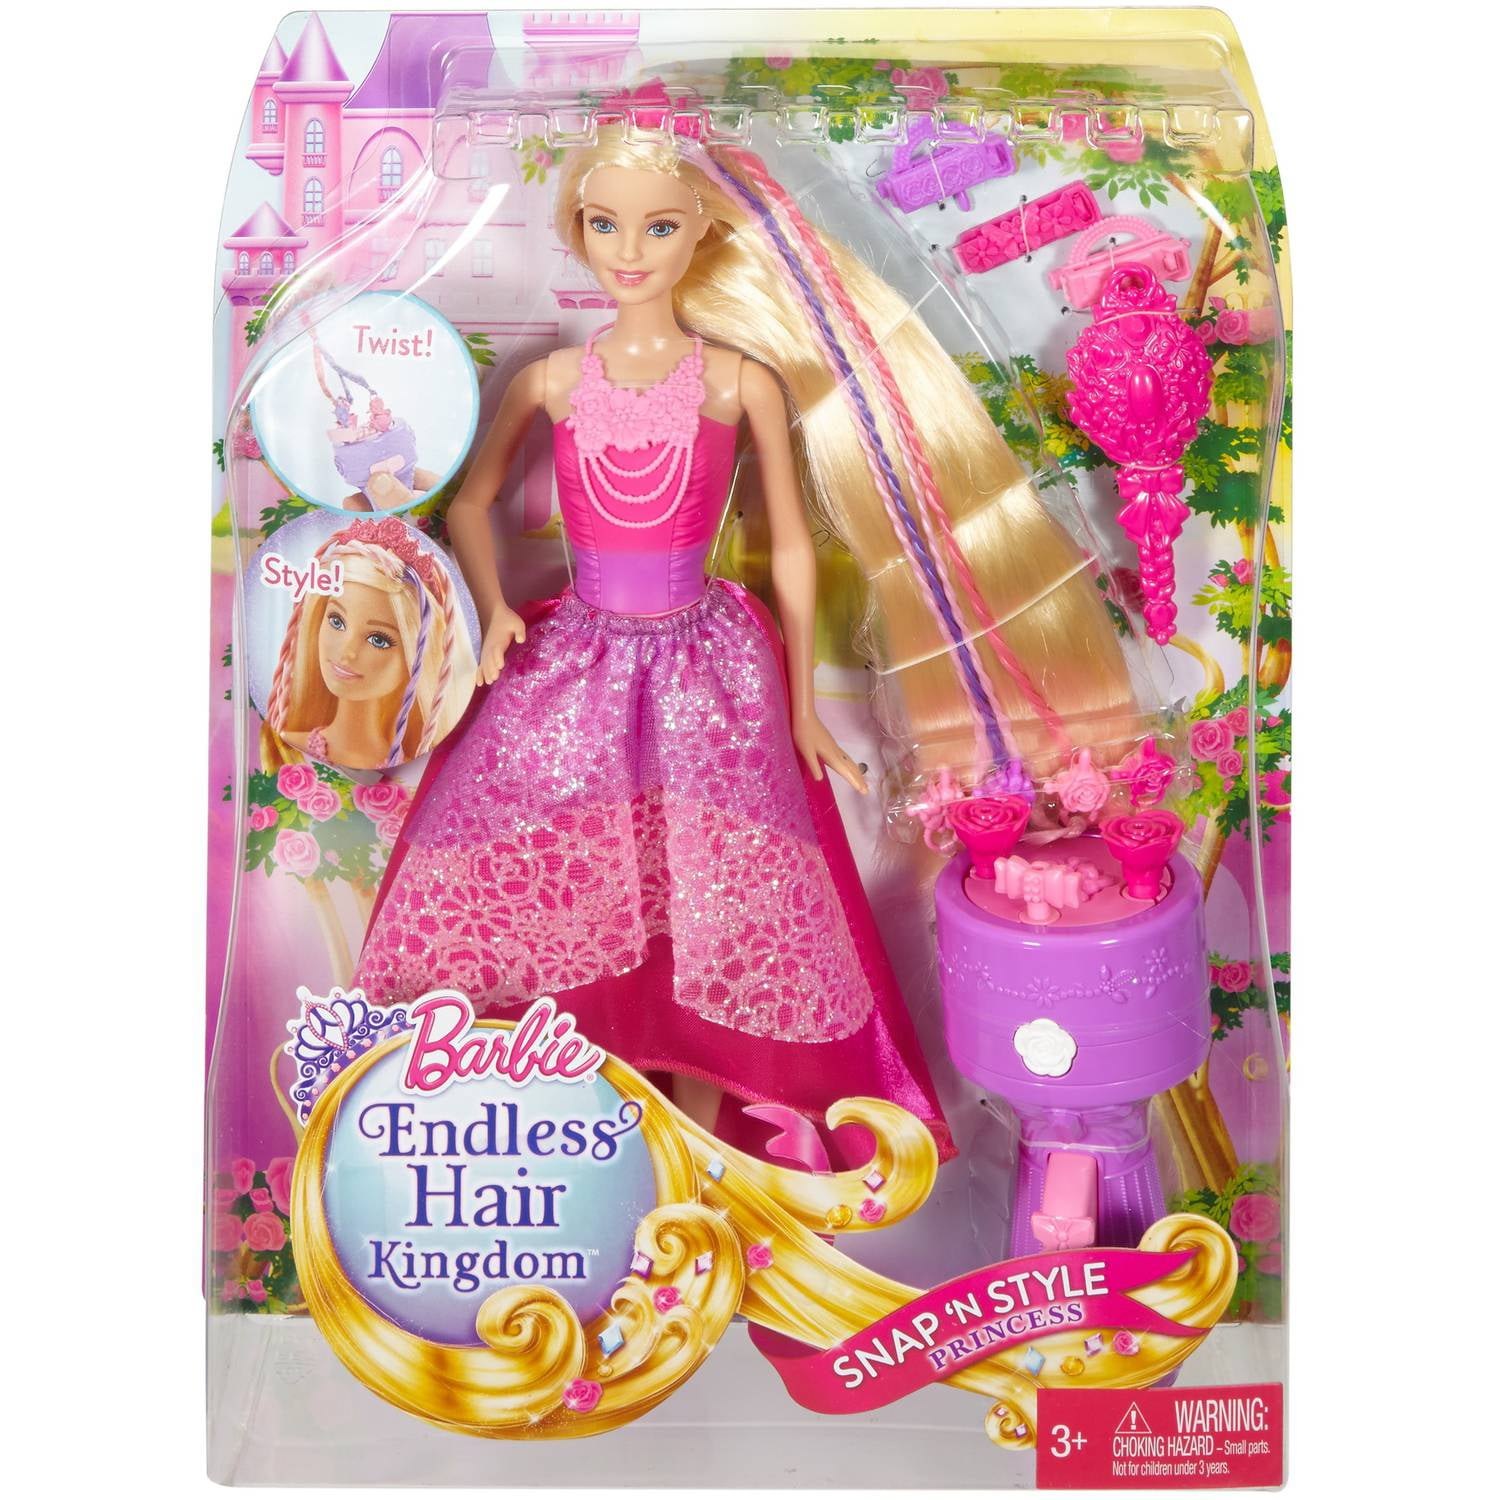 Barbie Endless Hair Kingdom Snap 'N Style Princess Doll - Walmart.com